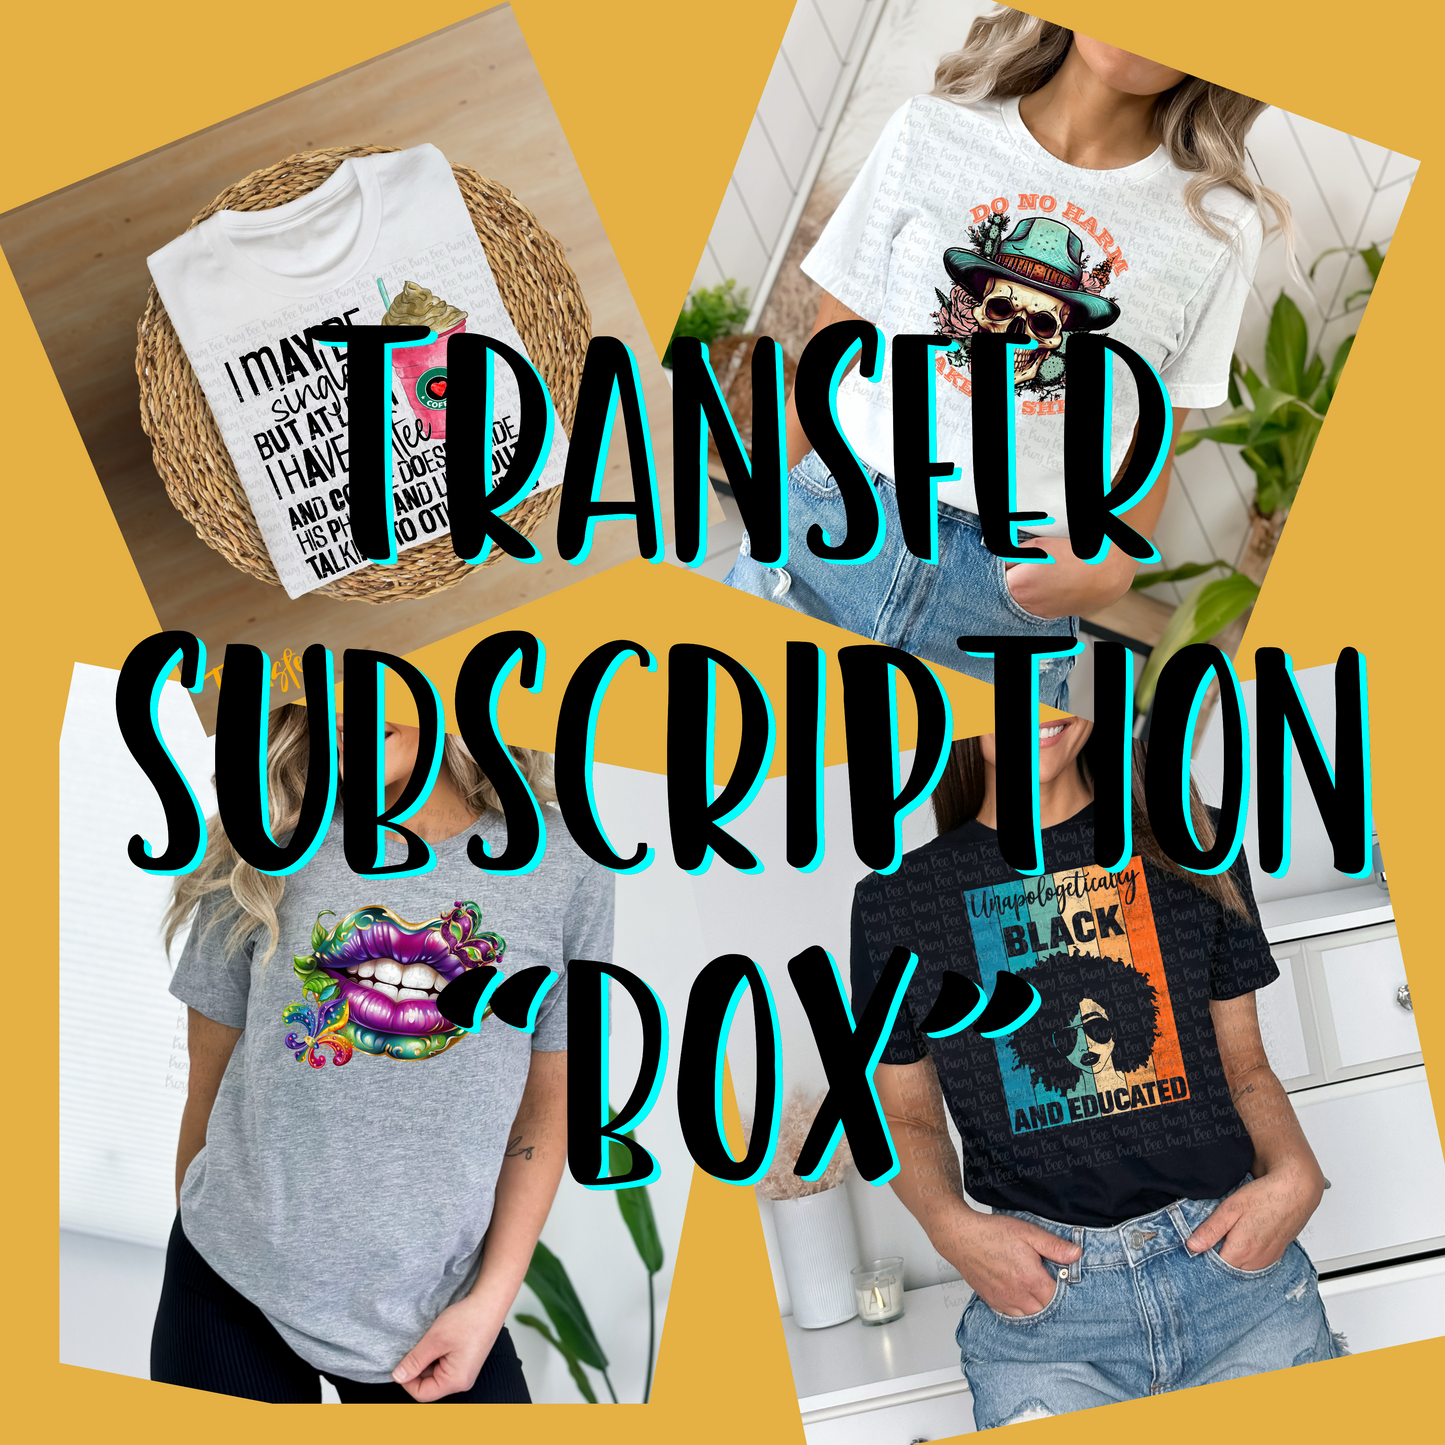 Transfer Subscription "Box"